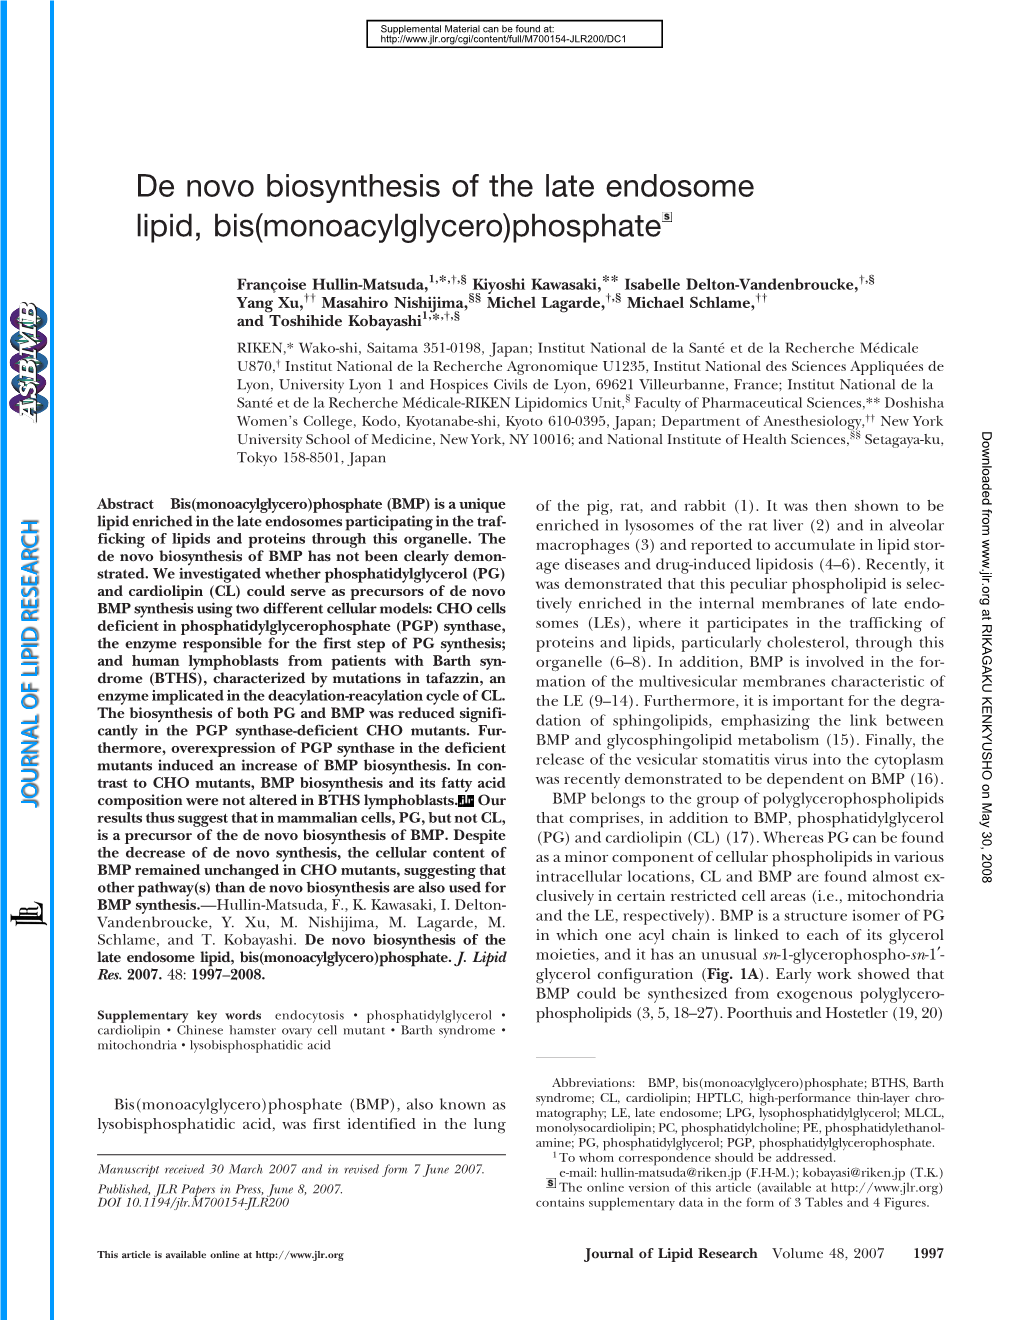 De Novo Biosynthesis of the Late Endosome Lipid, Bis(Monoacylglycero)Phosphate